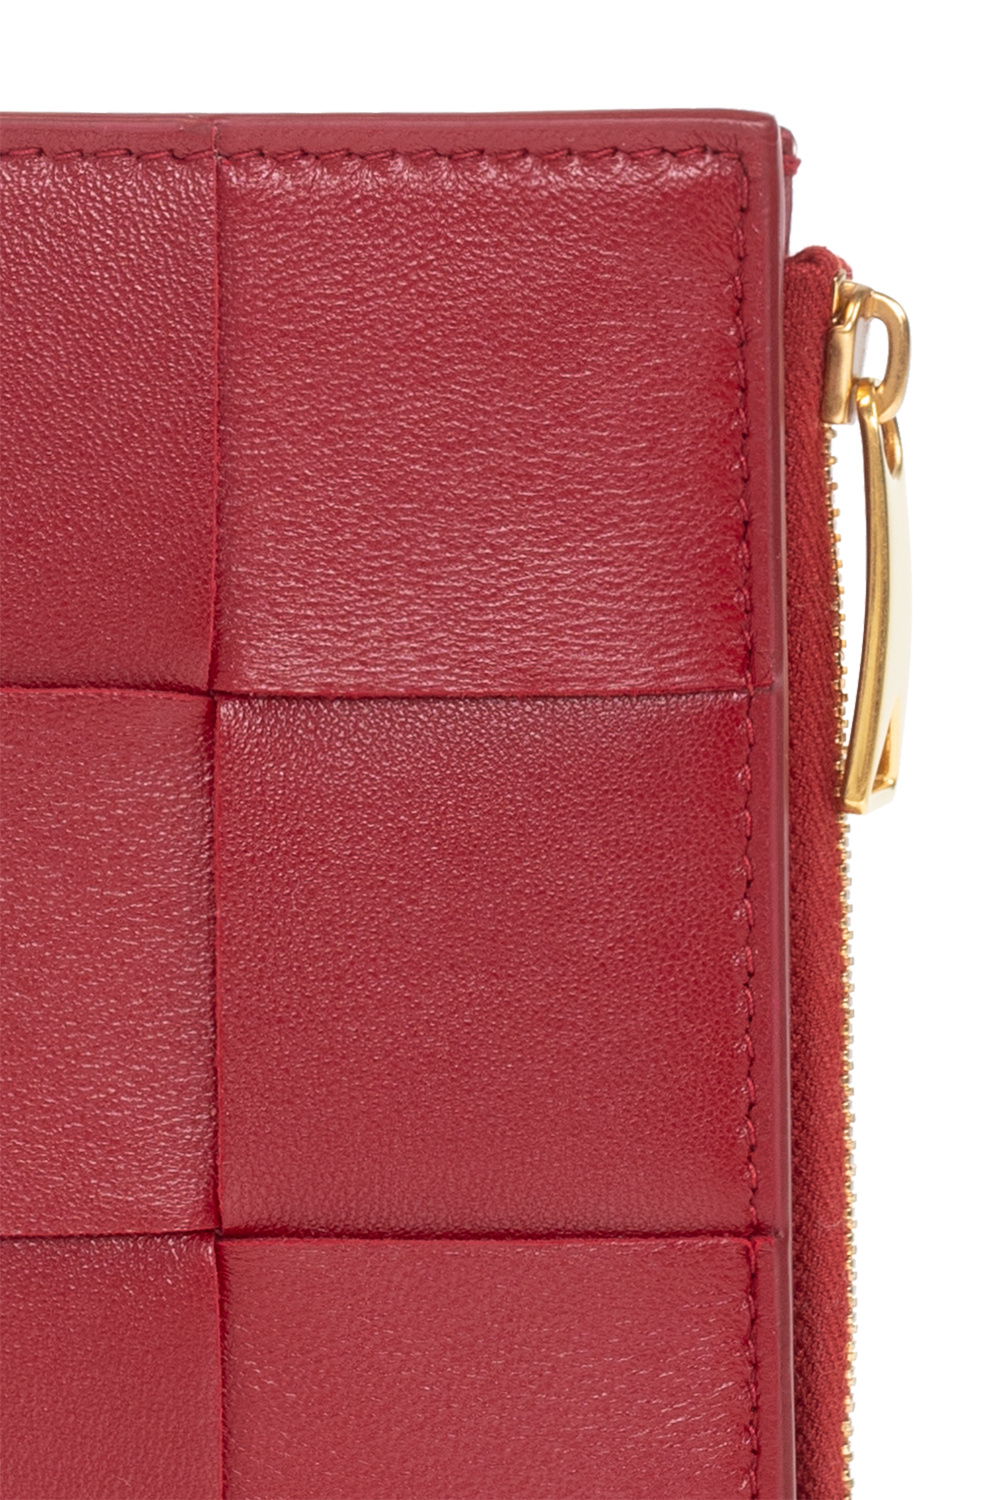 Bottega Veneta ‘B-Fold’ wallet